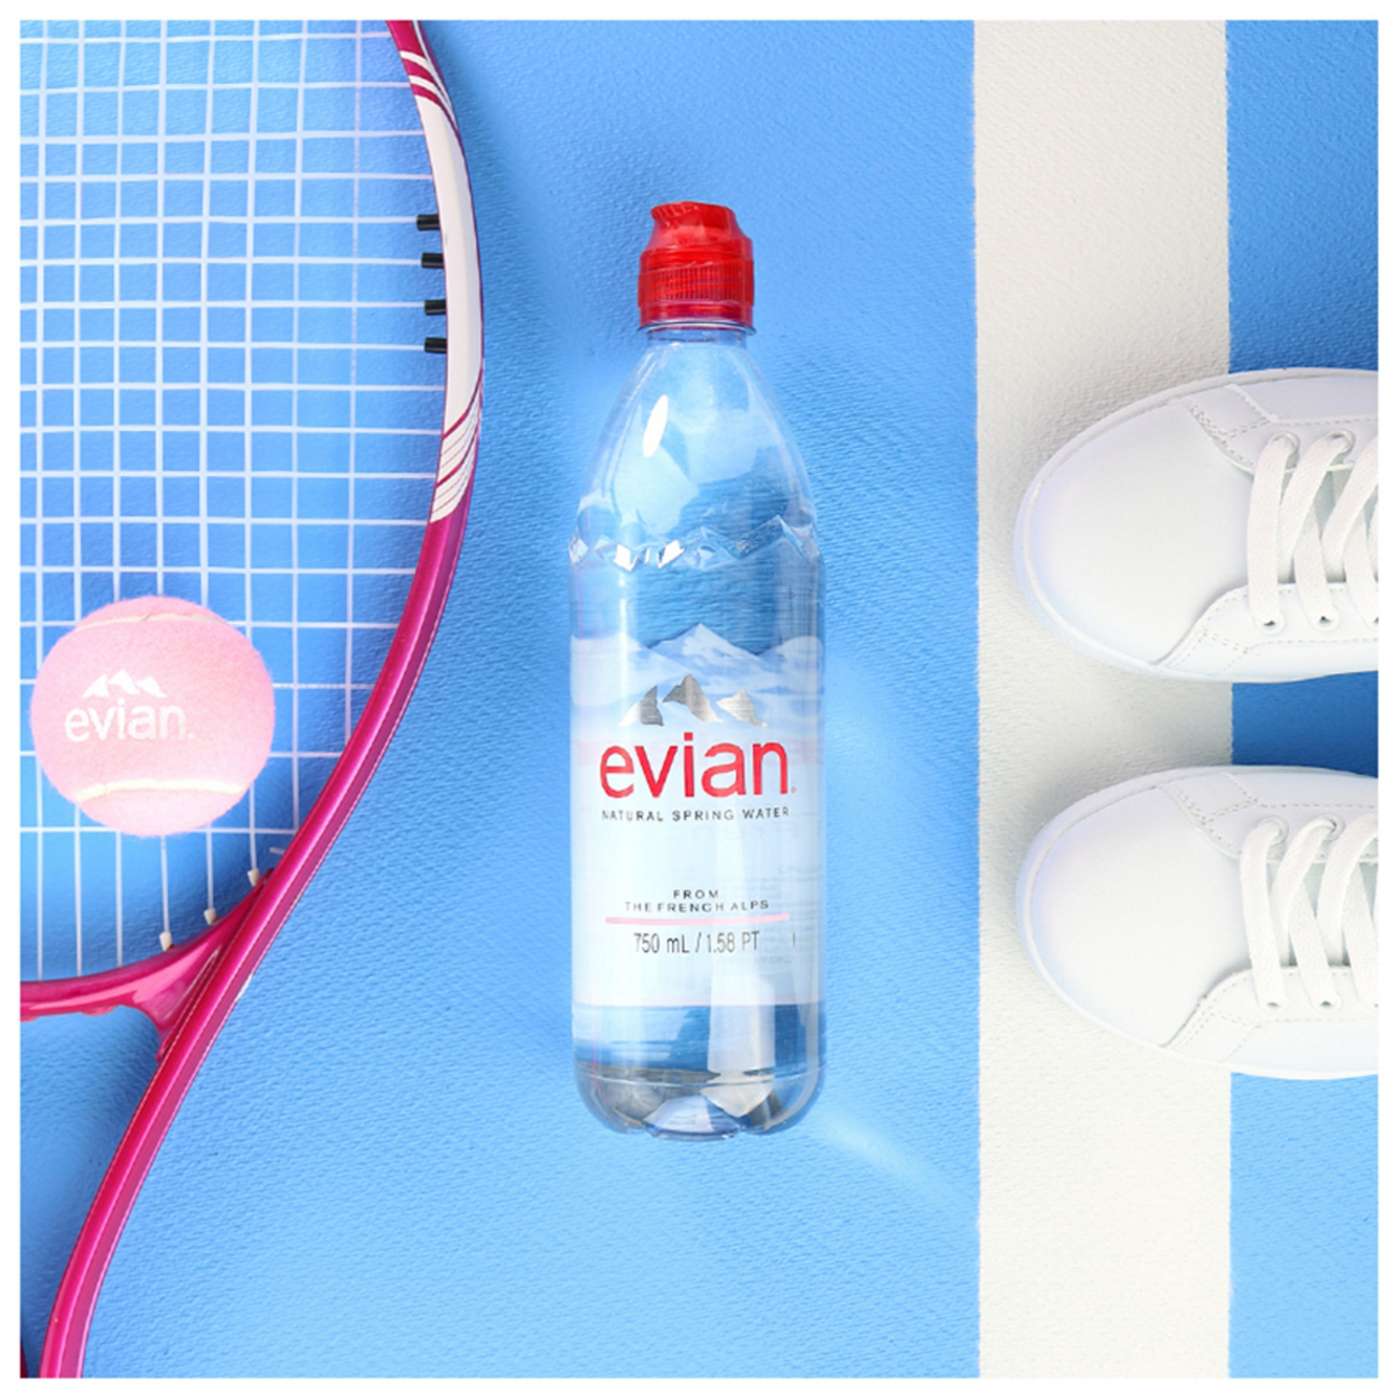 Evian Natural Spring Water; image 3 of 3